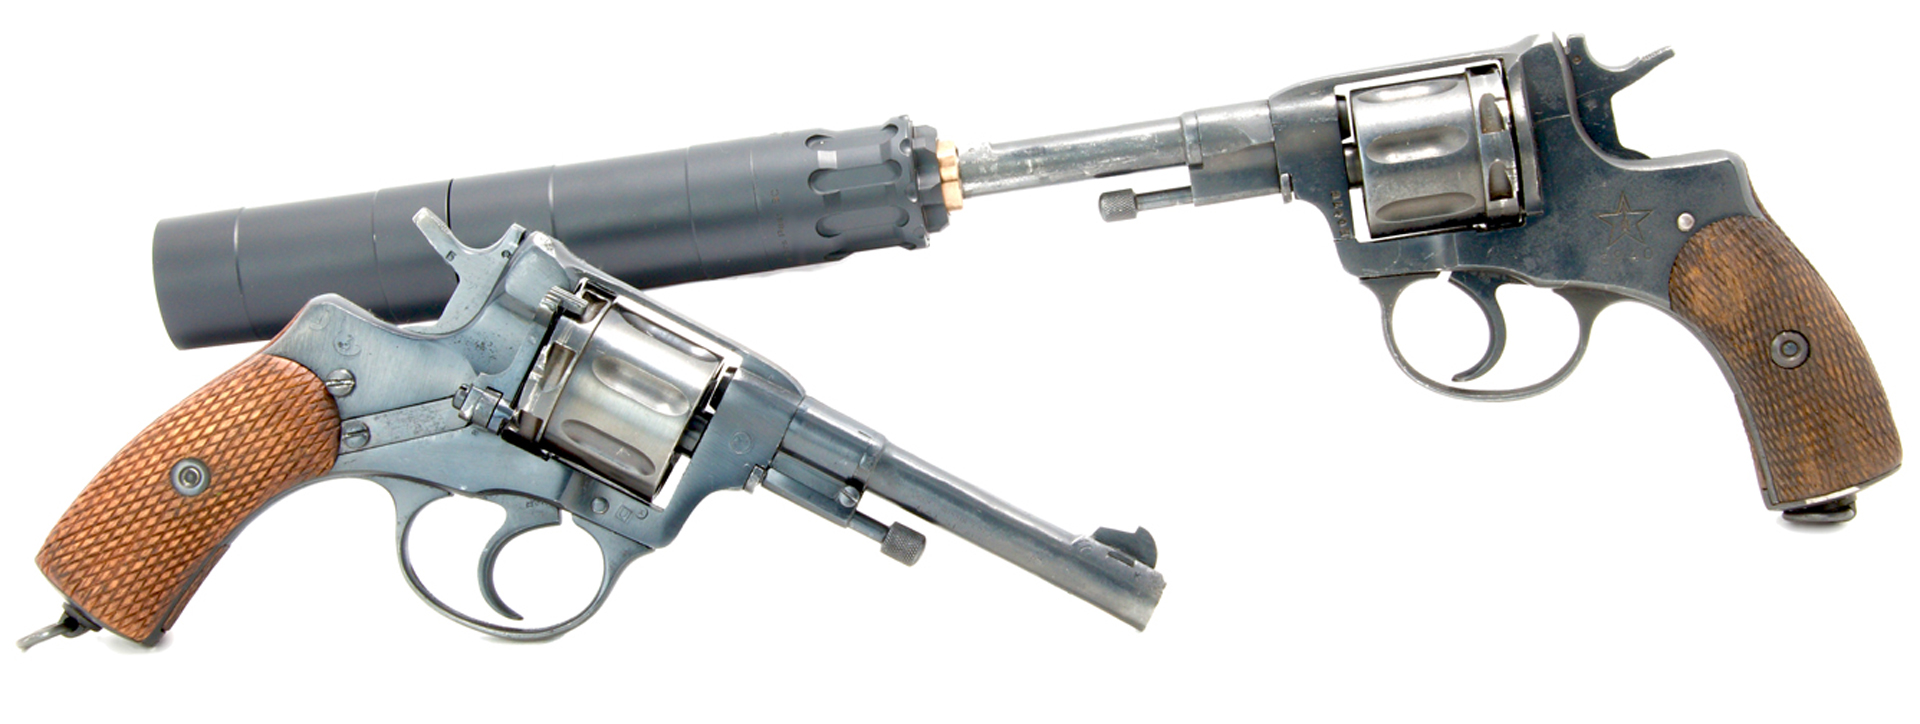 nagant m1898 revolvers two guns opposing position rear revovler has suppressor silencer affixed to barrel wood grips vintage weather finish white background